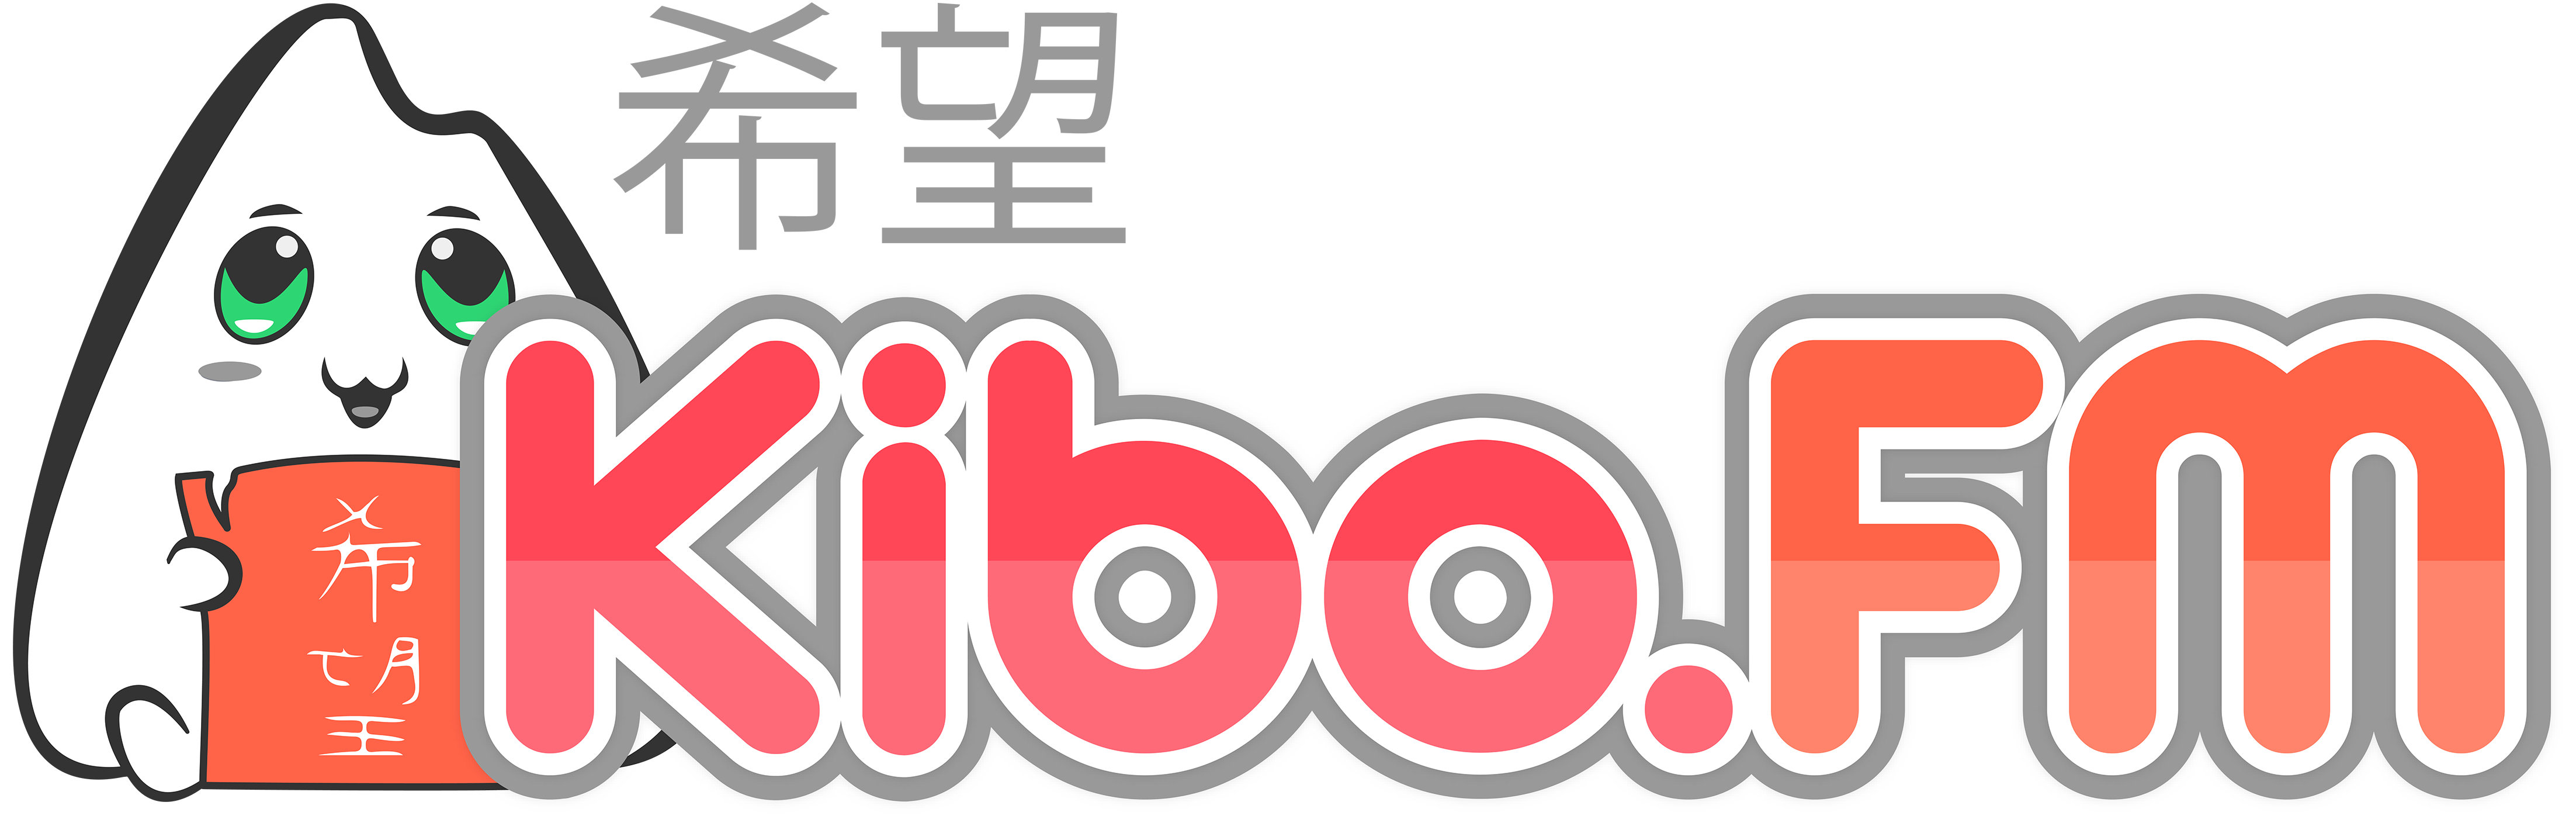 Kibo.FM - Euer Japanradio im Netz